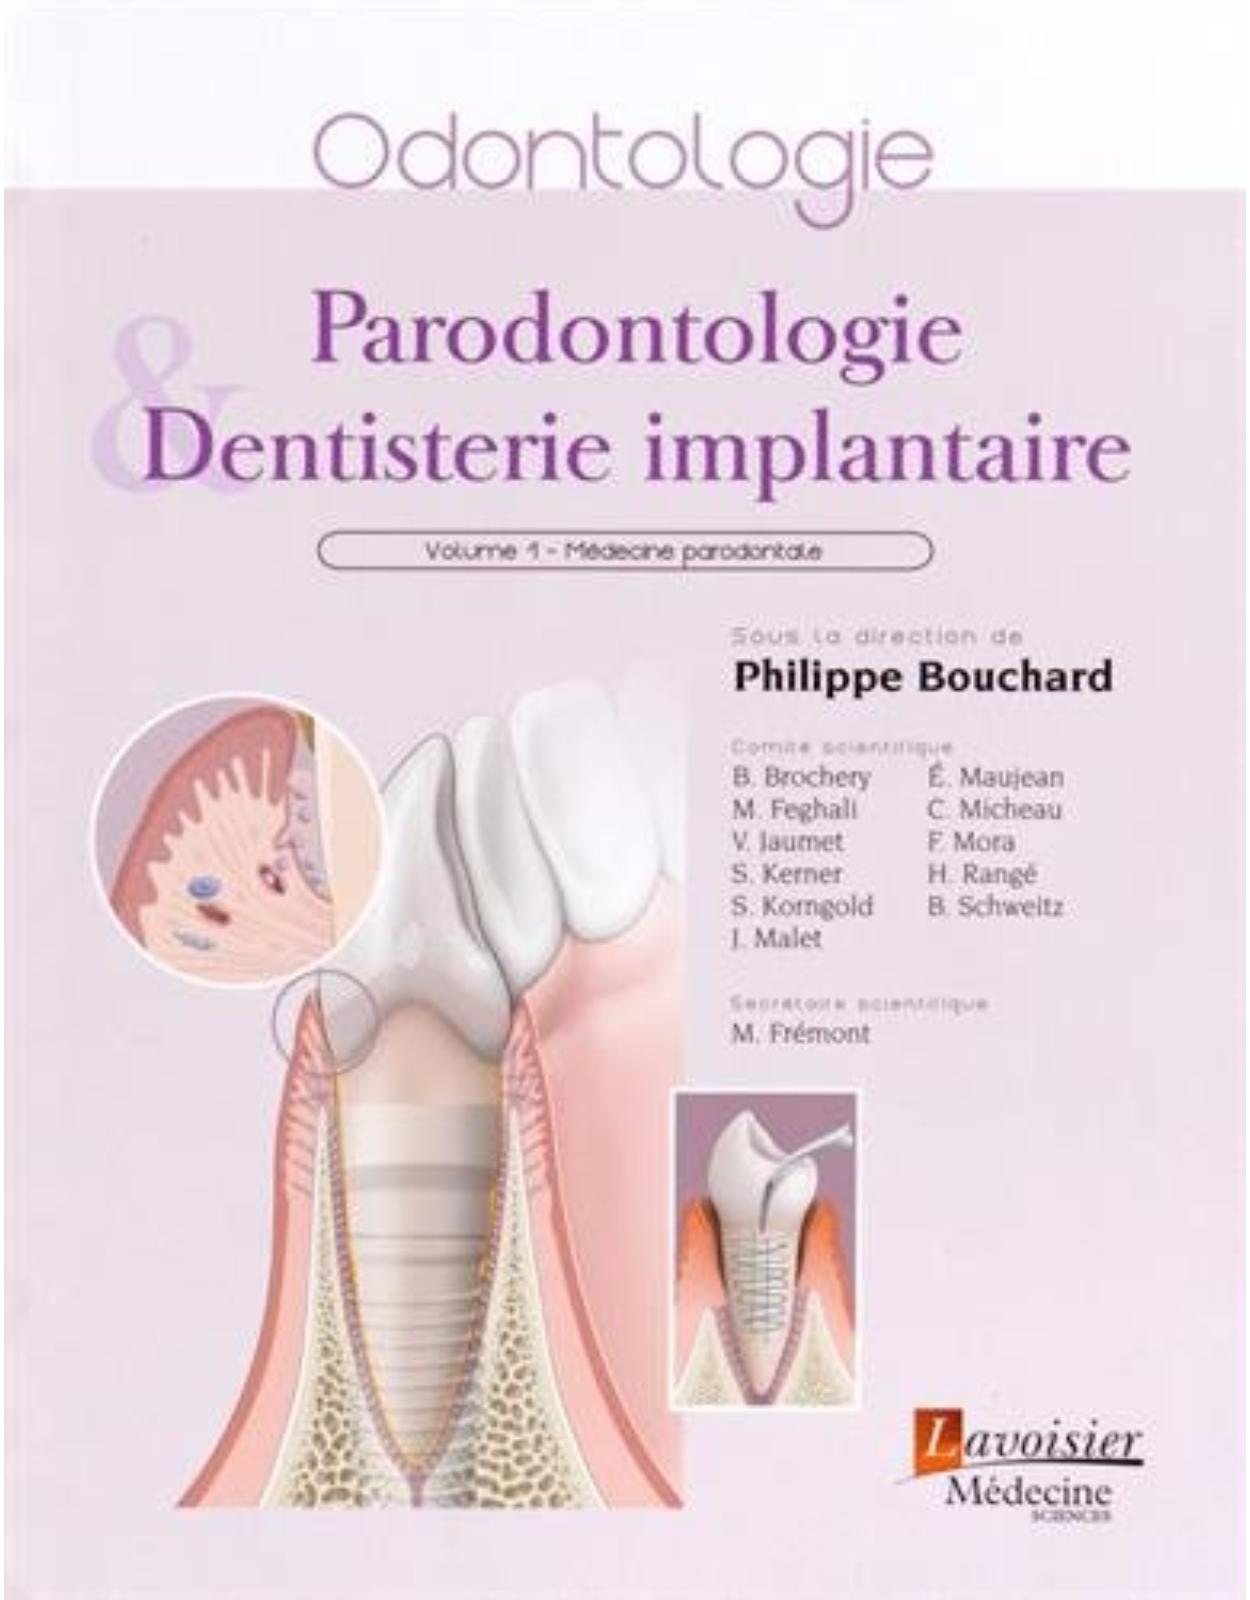 Parodontologie & dentisterie implantaire : Volume 1, Medicine parodontale